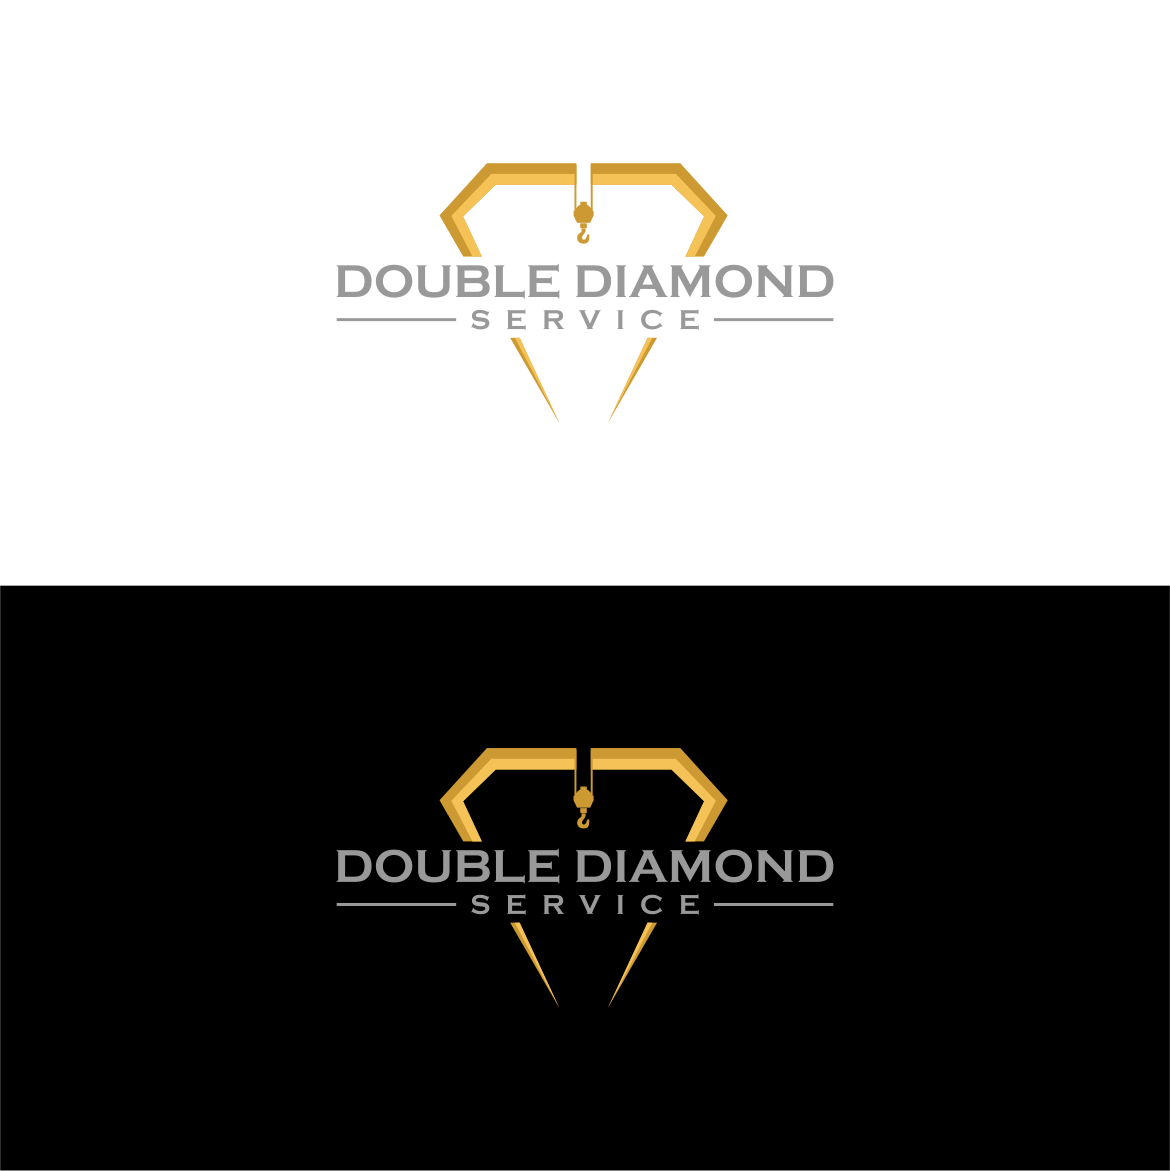 Double Diamond Logo - DesignContest Diamond Service Double Diamond Service